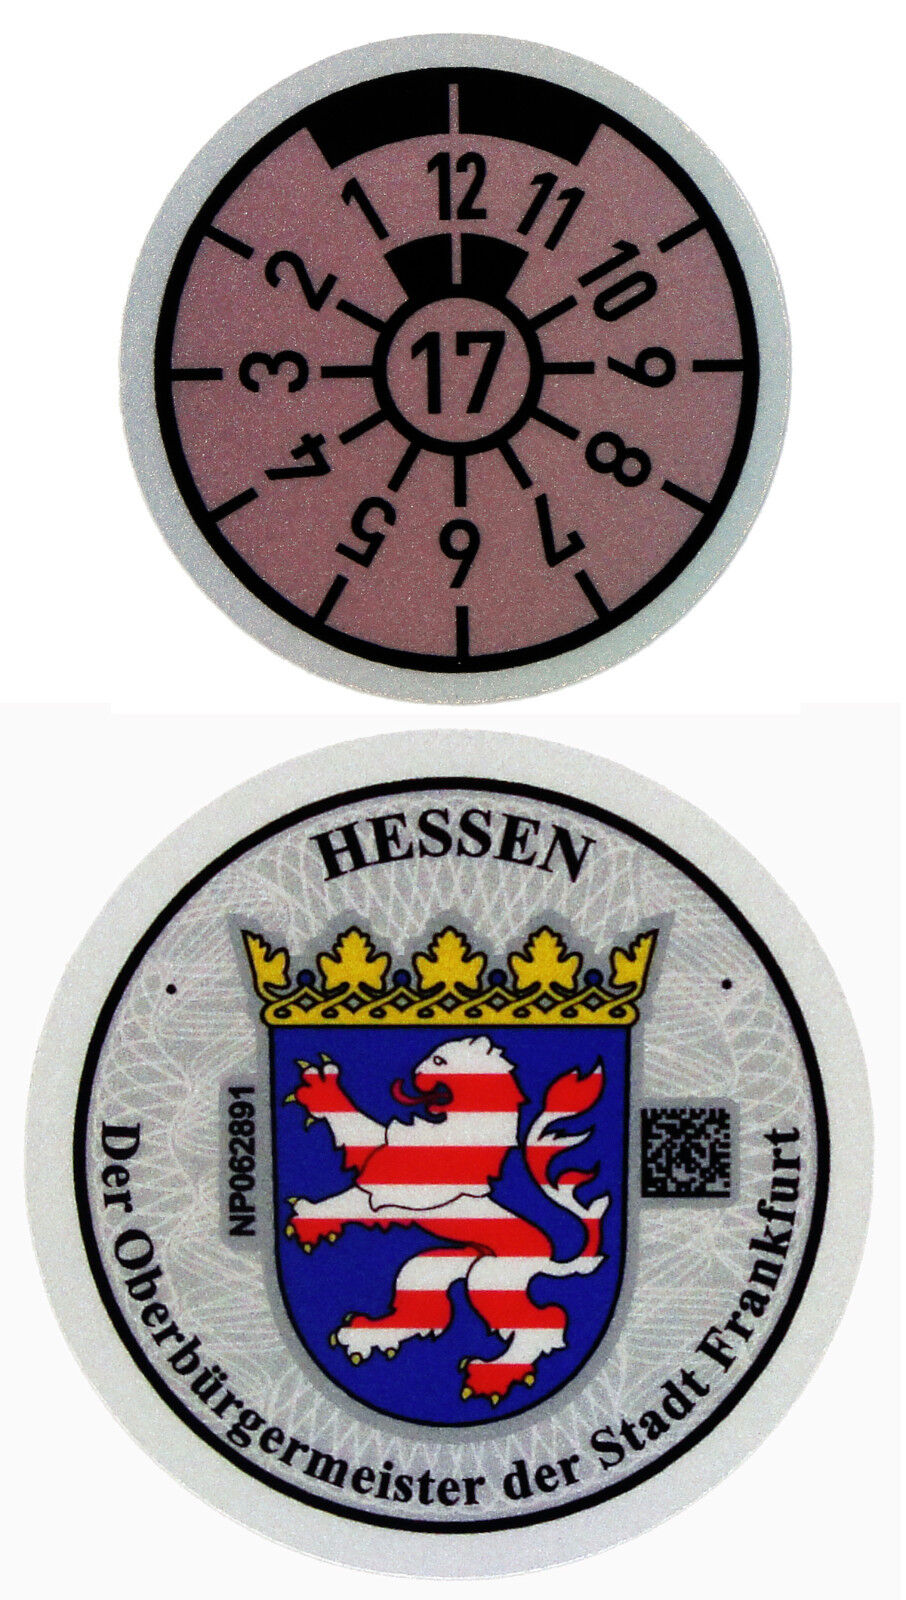 Frankfurt Germany -  German License Plate Registration Seal & Inspection Sticker